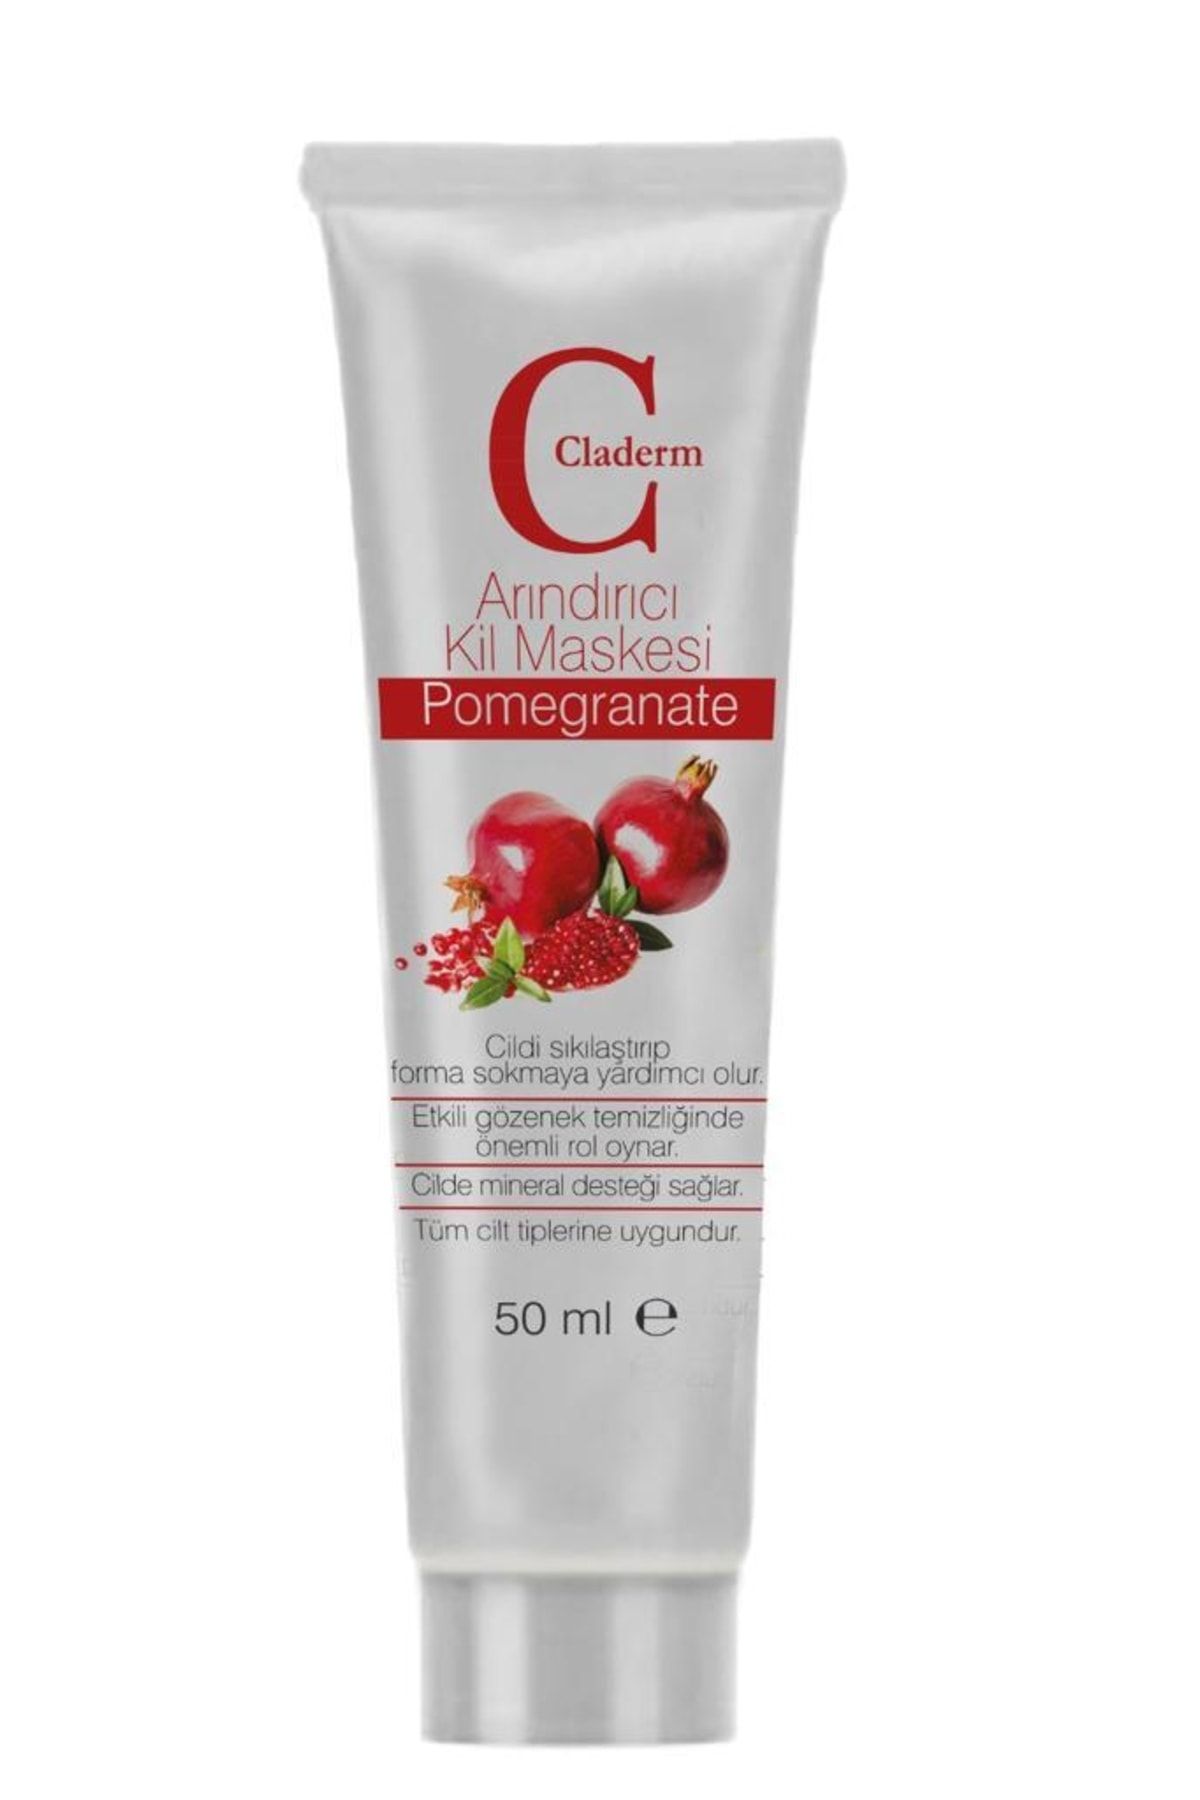 Claderm 50 ml Kil Maskesi – Pomegranate